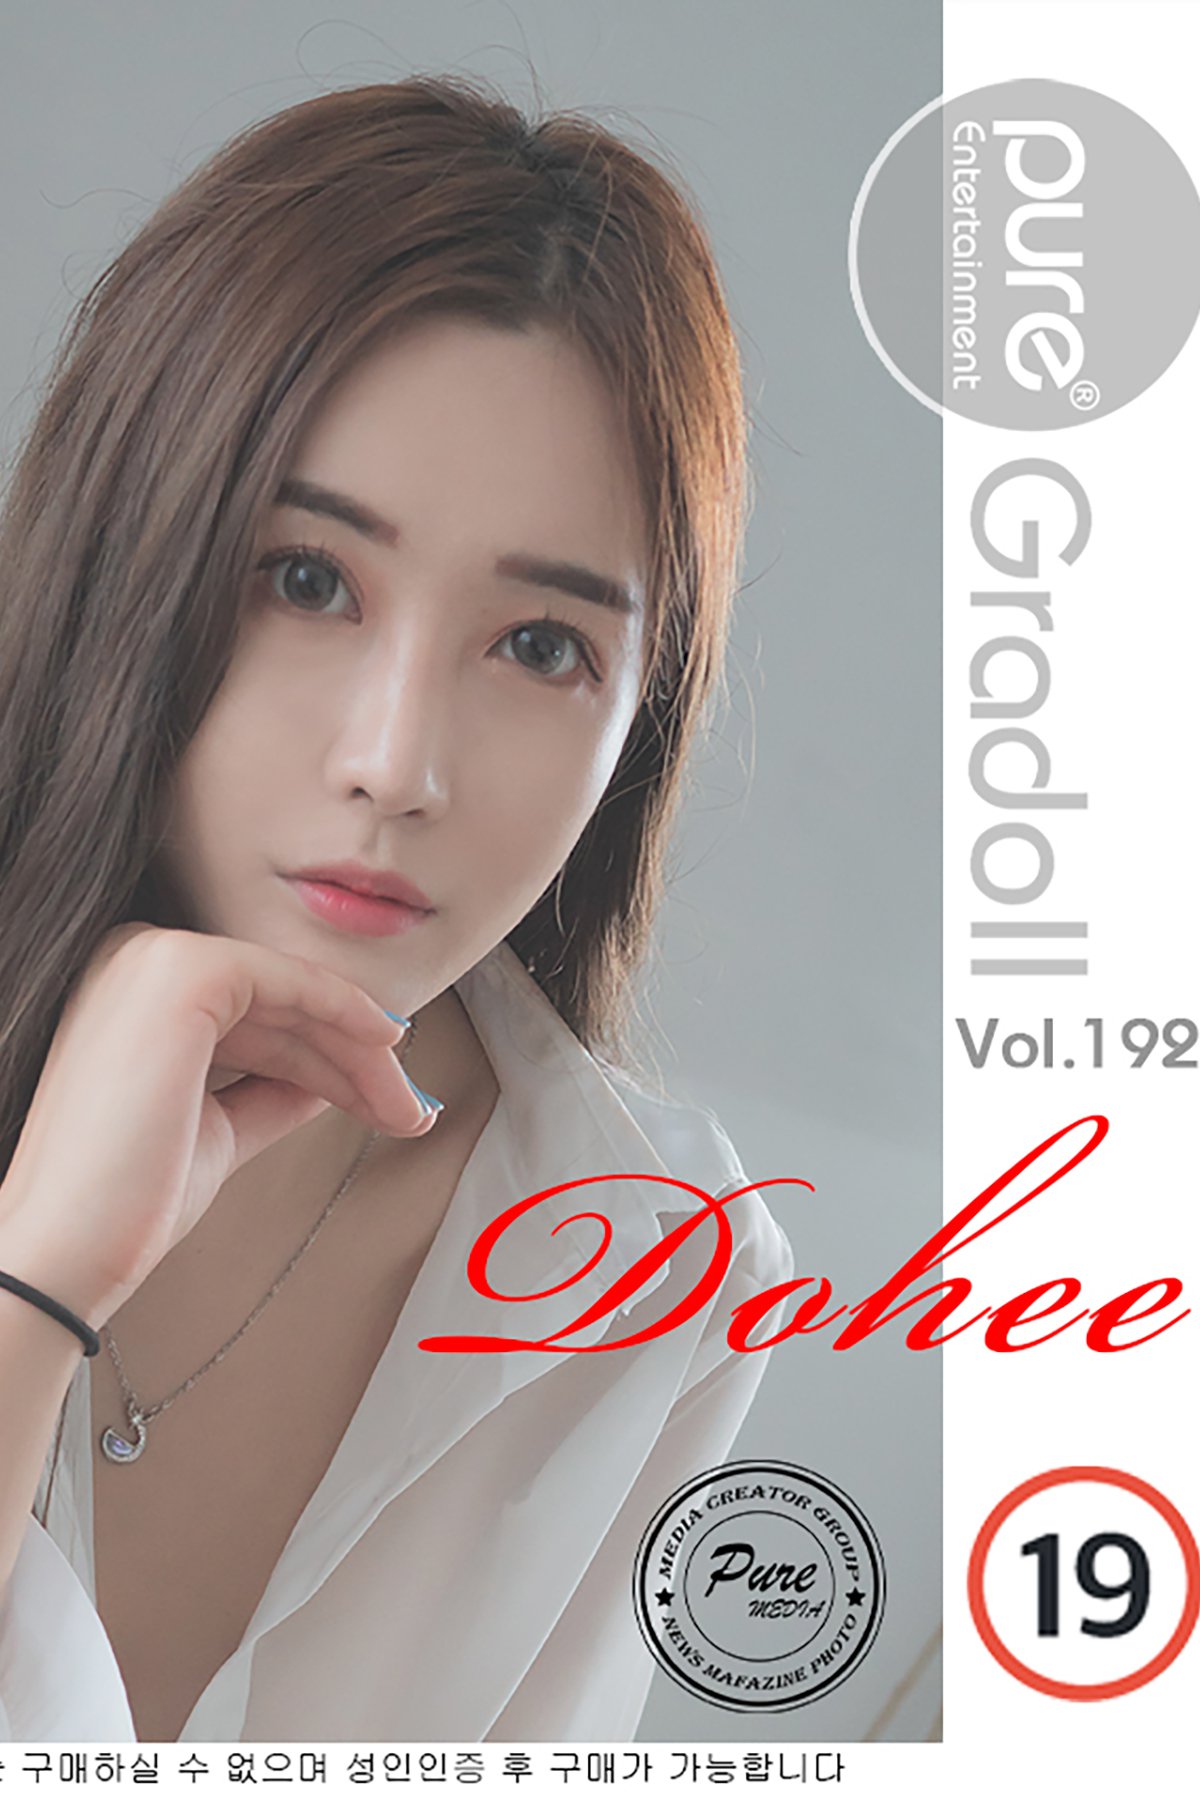 PureMedia-Vol-192-Dohee-도희-0000-7792101347.jpg